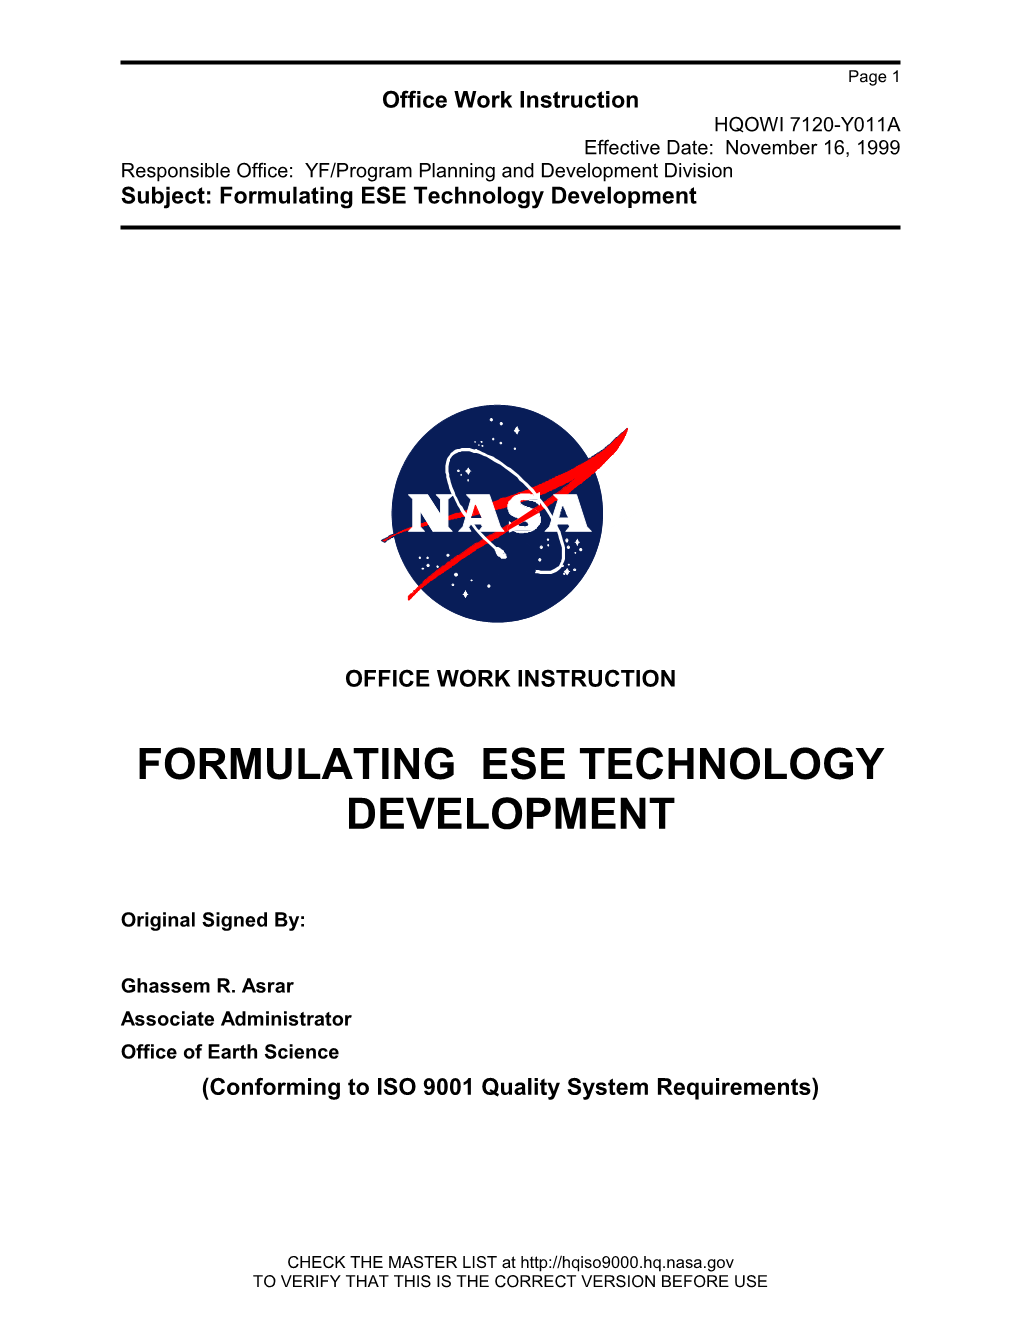 Formulate the ESE Technology Development Program